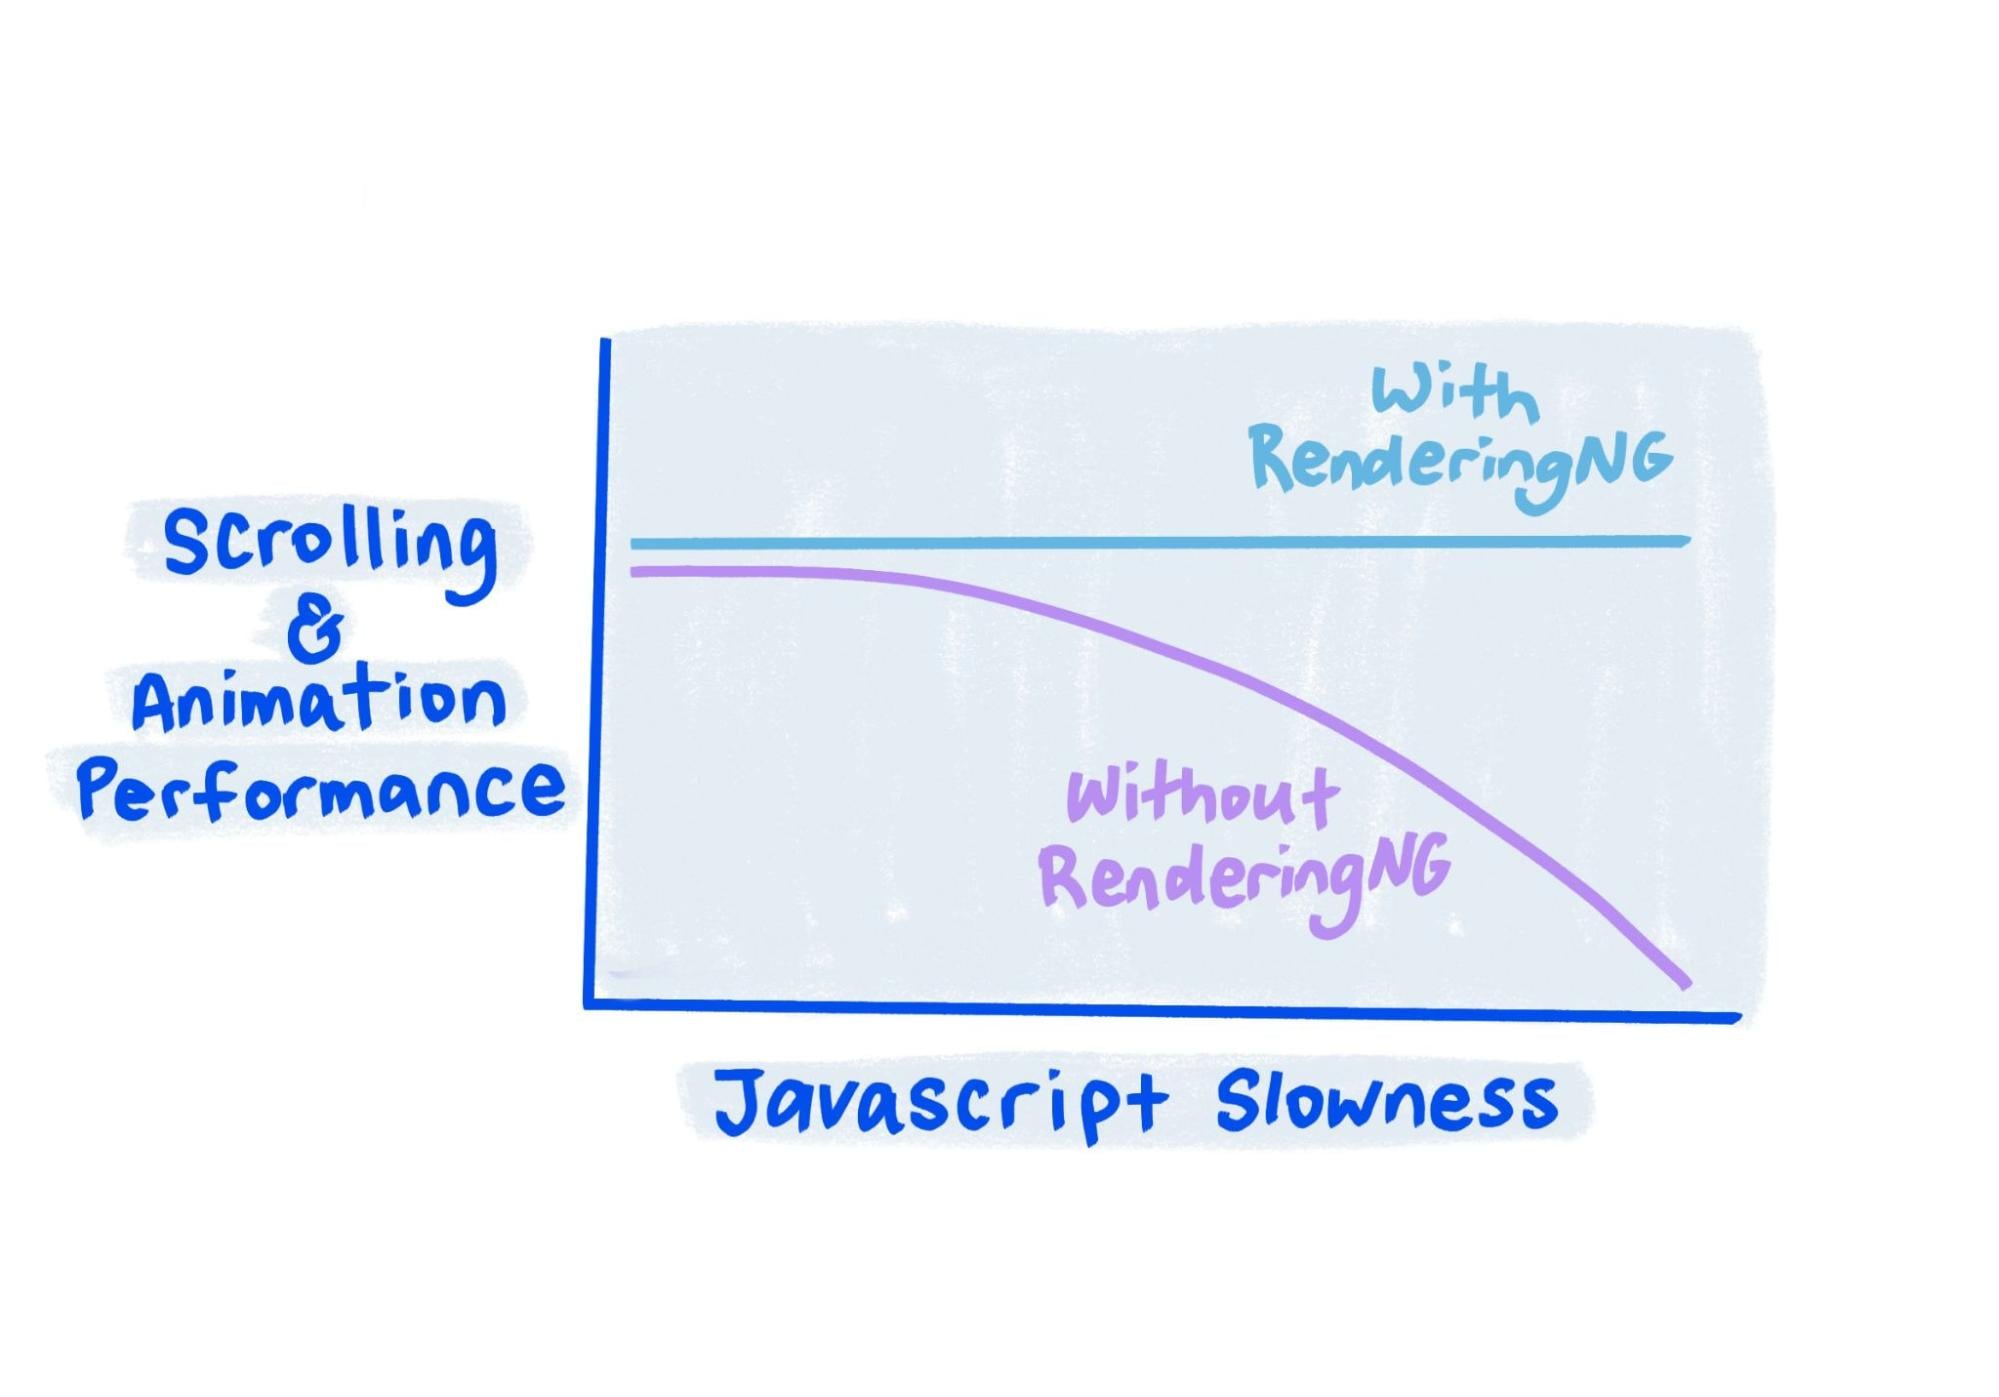 Sketch แสดงให้เห็นว่า ประสิทธิภาพ RenderingNG ที่เสถียรแม้ในขณะที่ JavaScript ทำงานช้ามาก